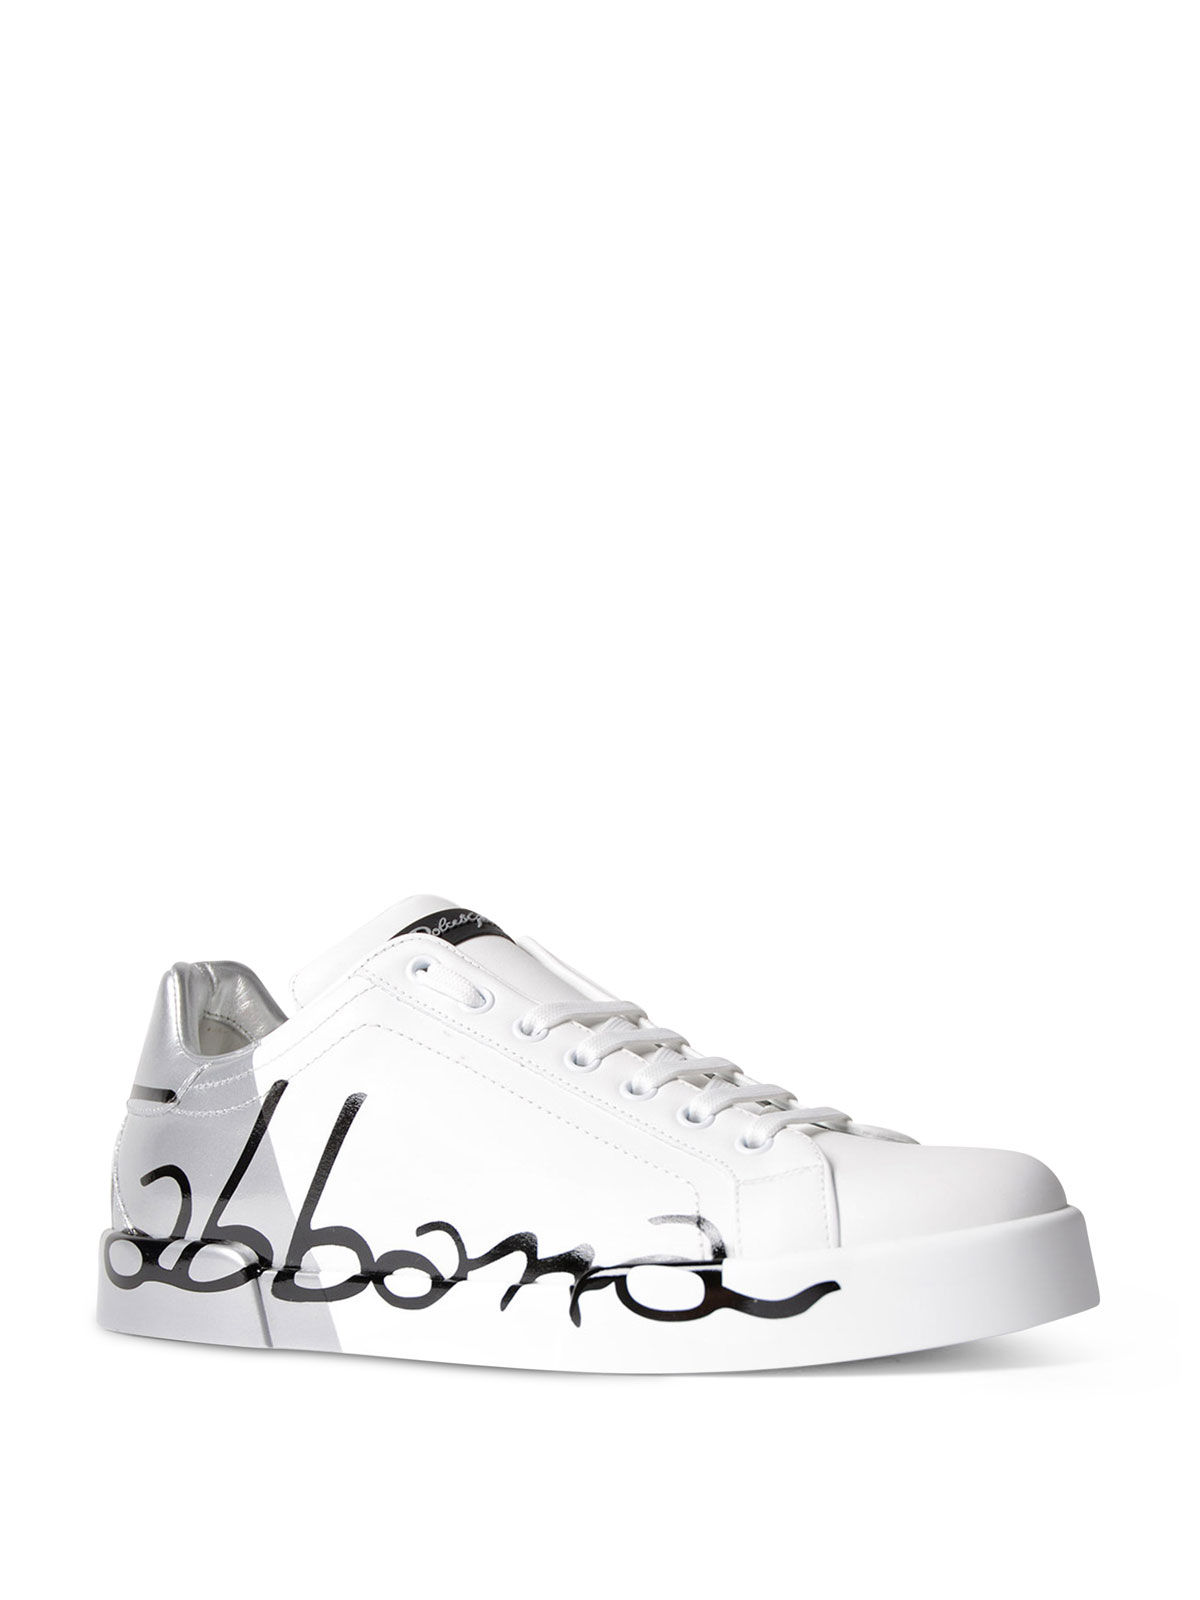 dolce gabbana silver sneakers